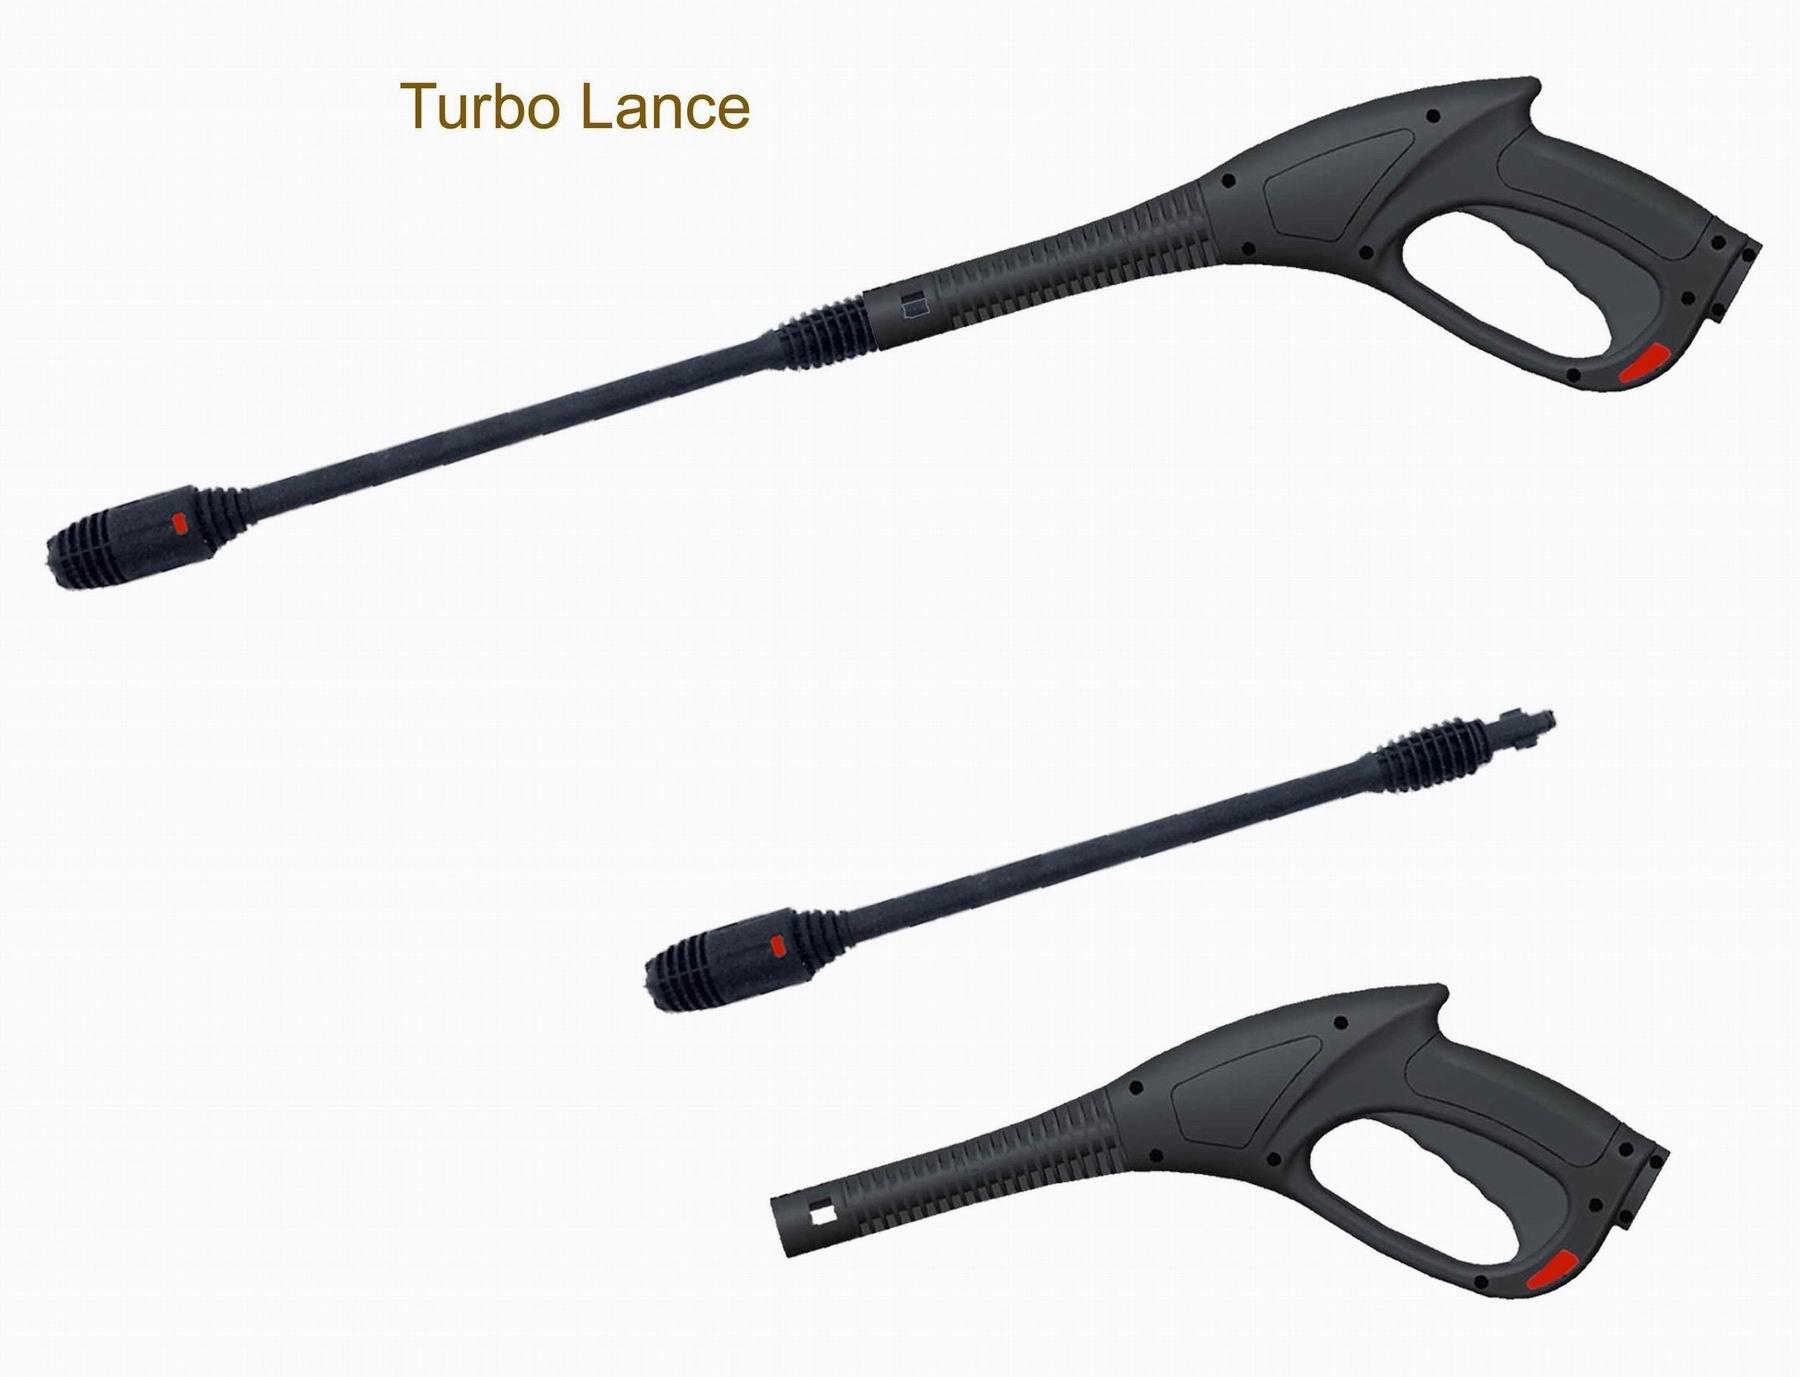  Turbo Lance (Turbo Ланс)